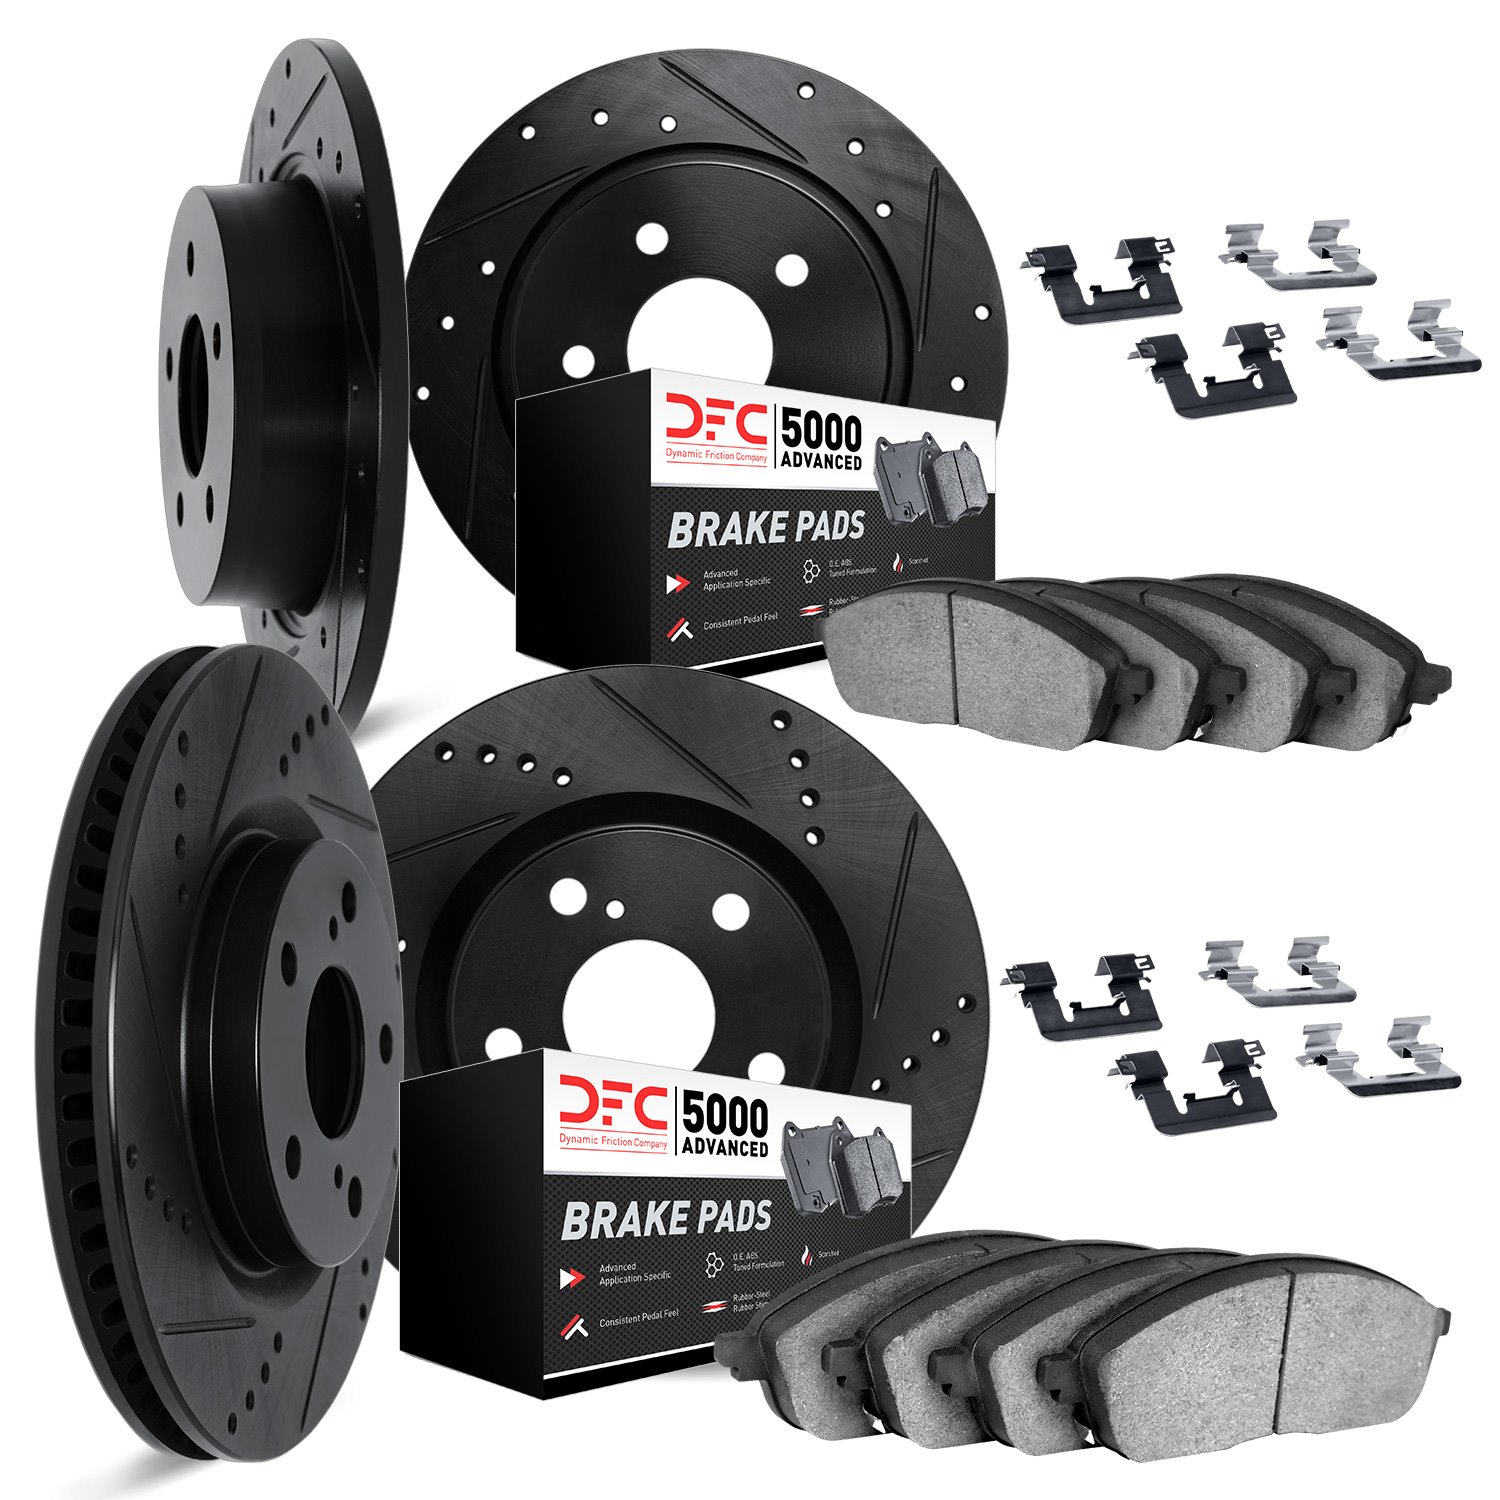 8514-40257 Drilled/Slotted Brake Rotors w/5000 Advanced Brake Pads Kit & Hardware [Black], 2003-2006 Mopar, Position: Front and